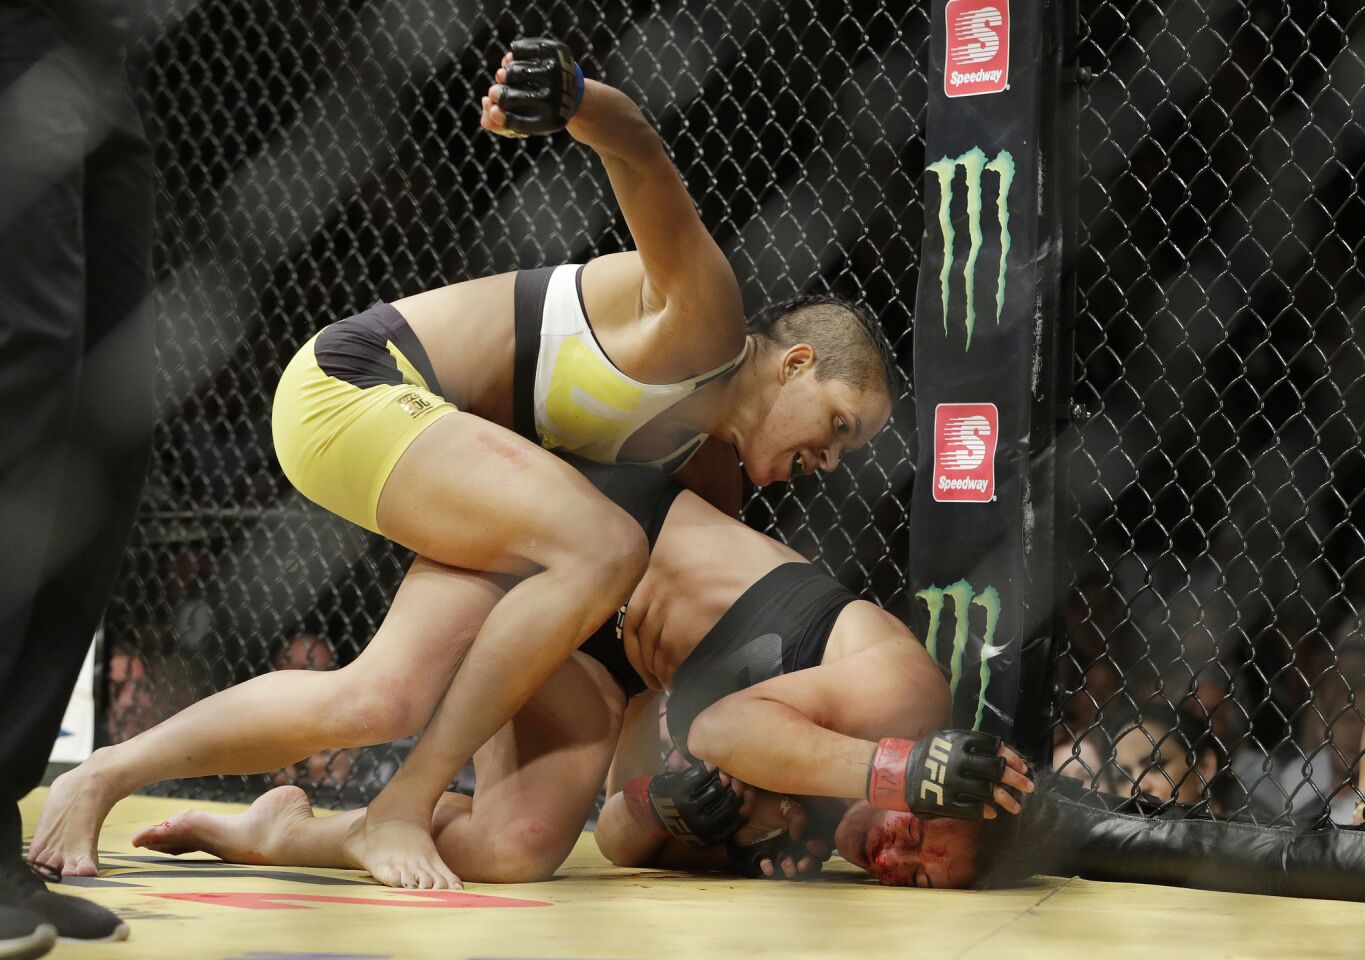 UFC 200: Amanda Nunes vs. Miesha Tate